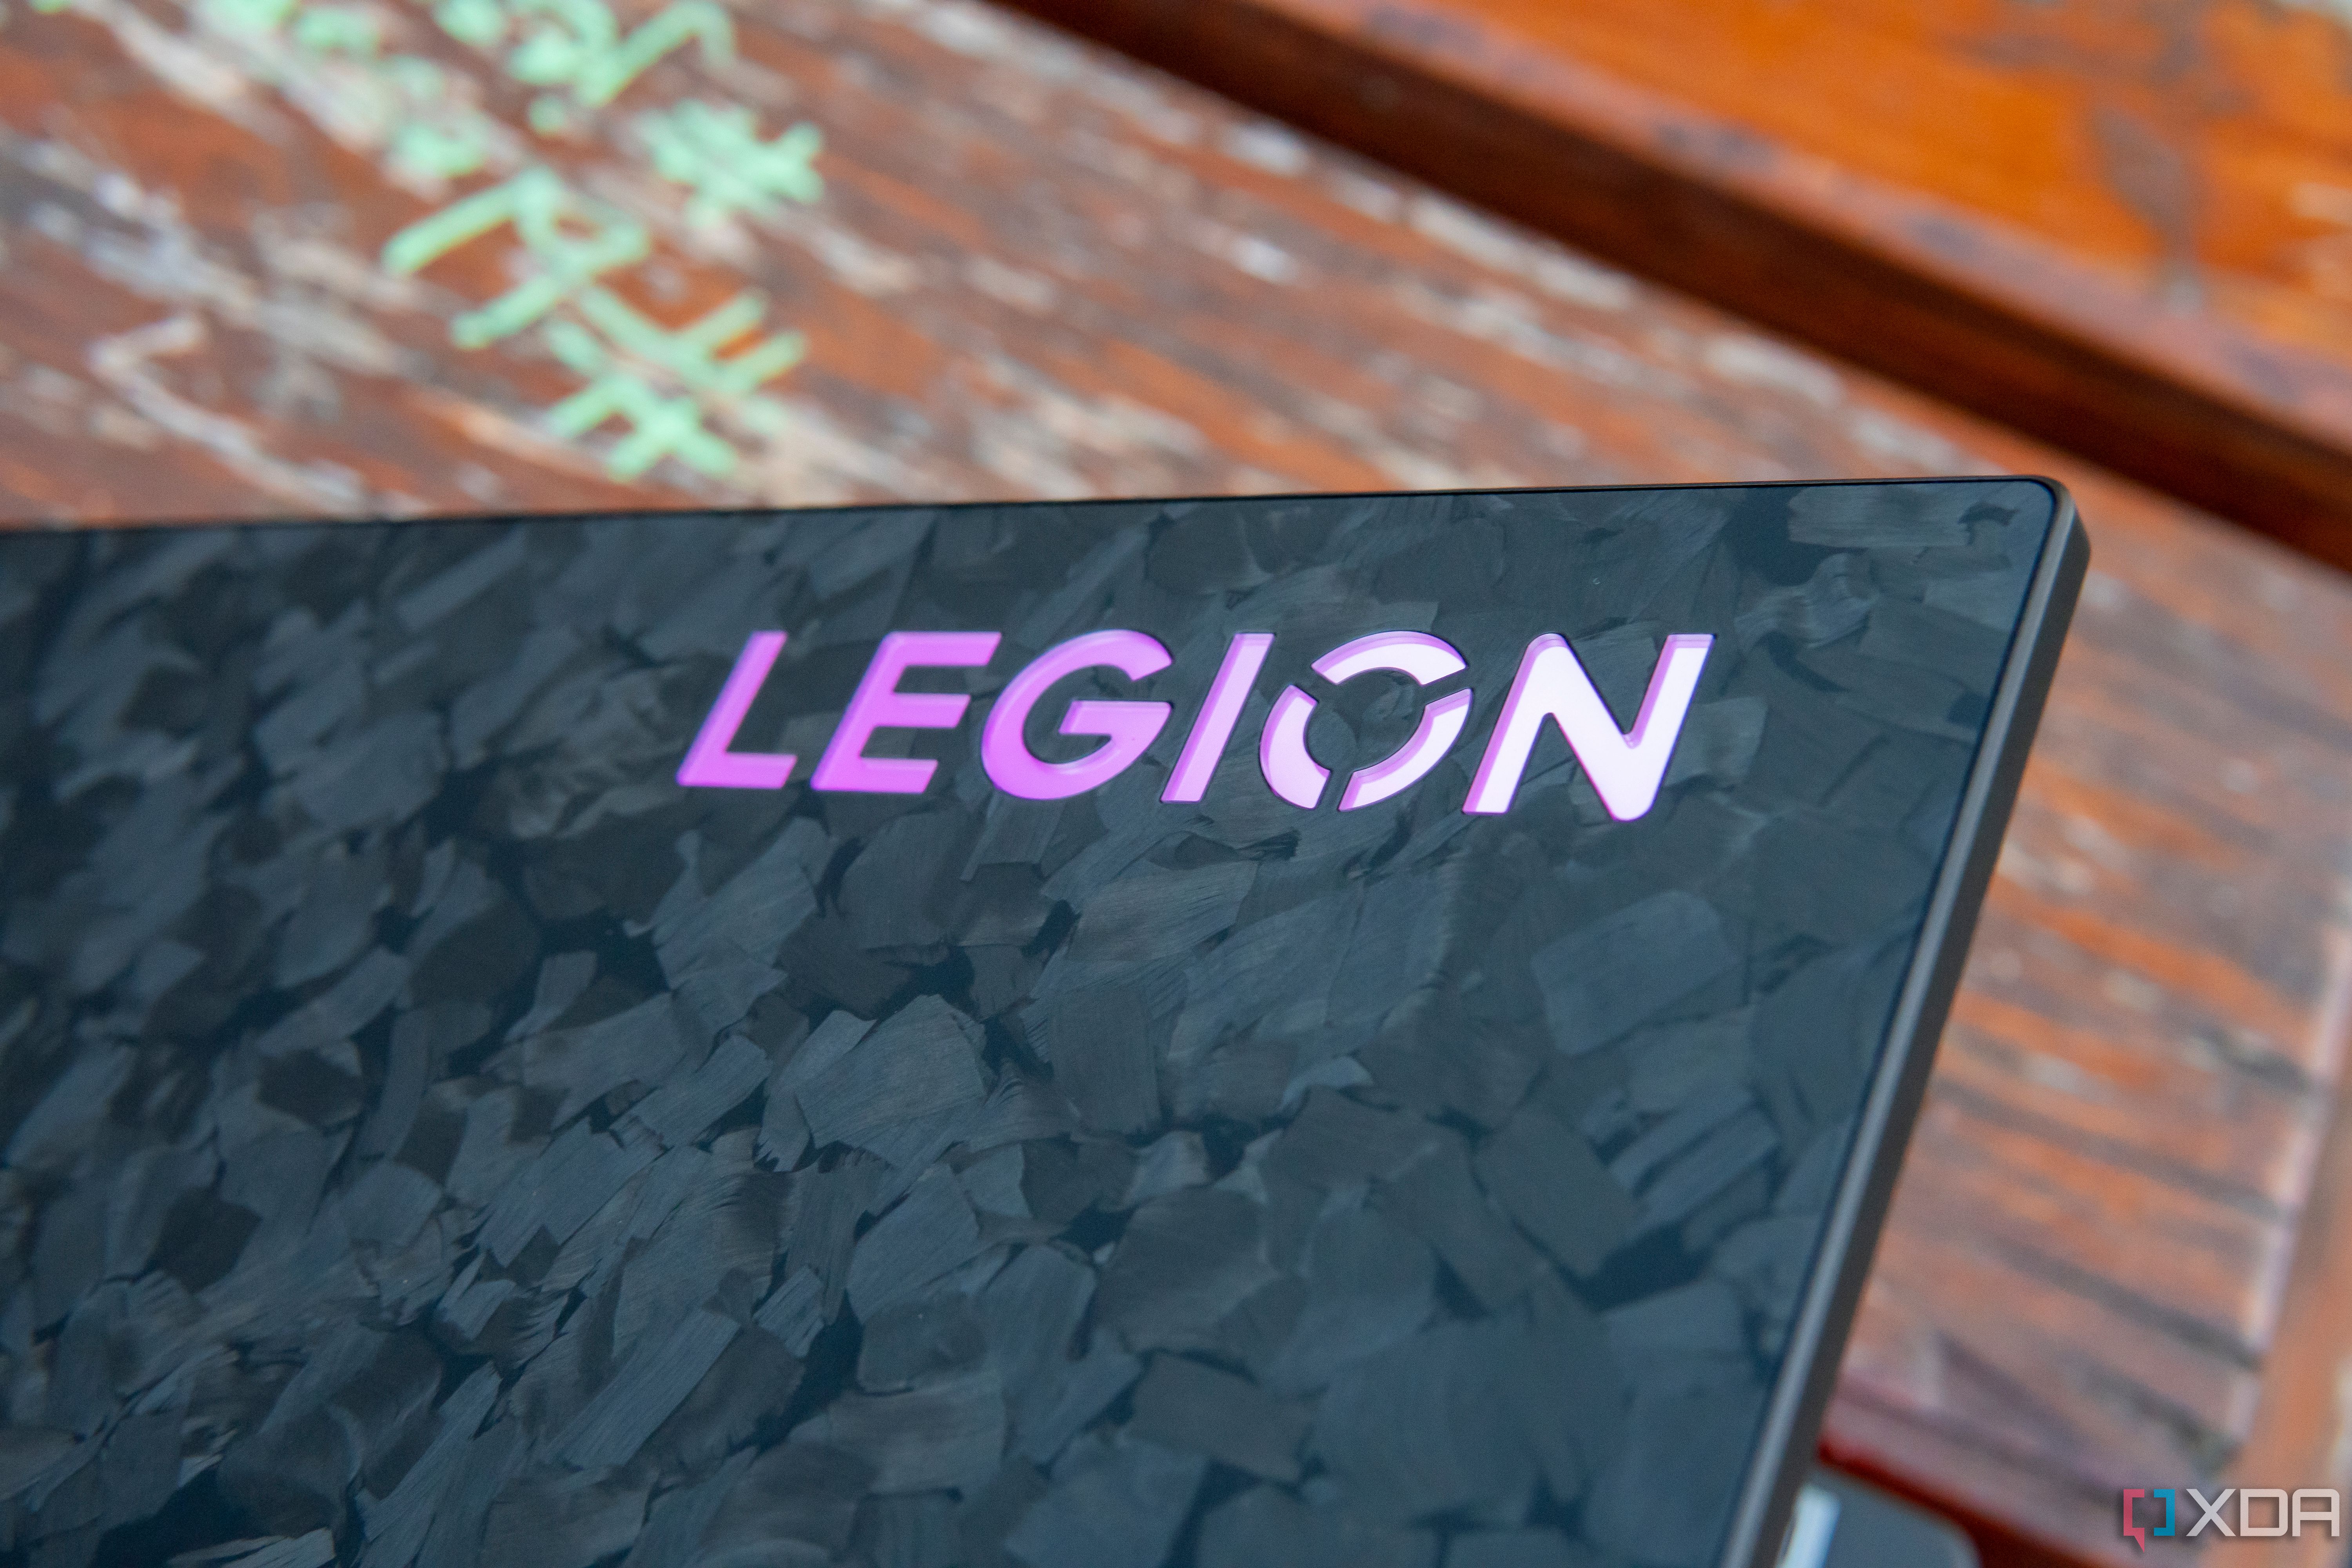 Close-up view of the Legion logo on the Lenovo Legion 9i